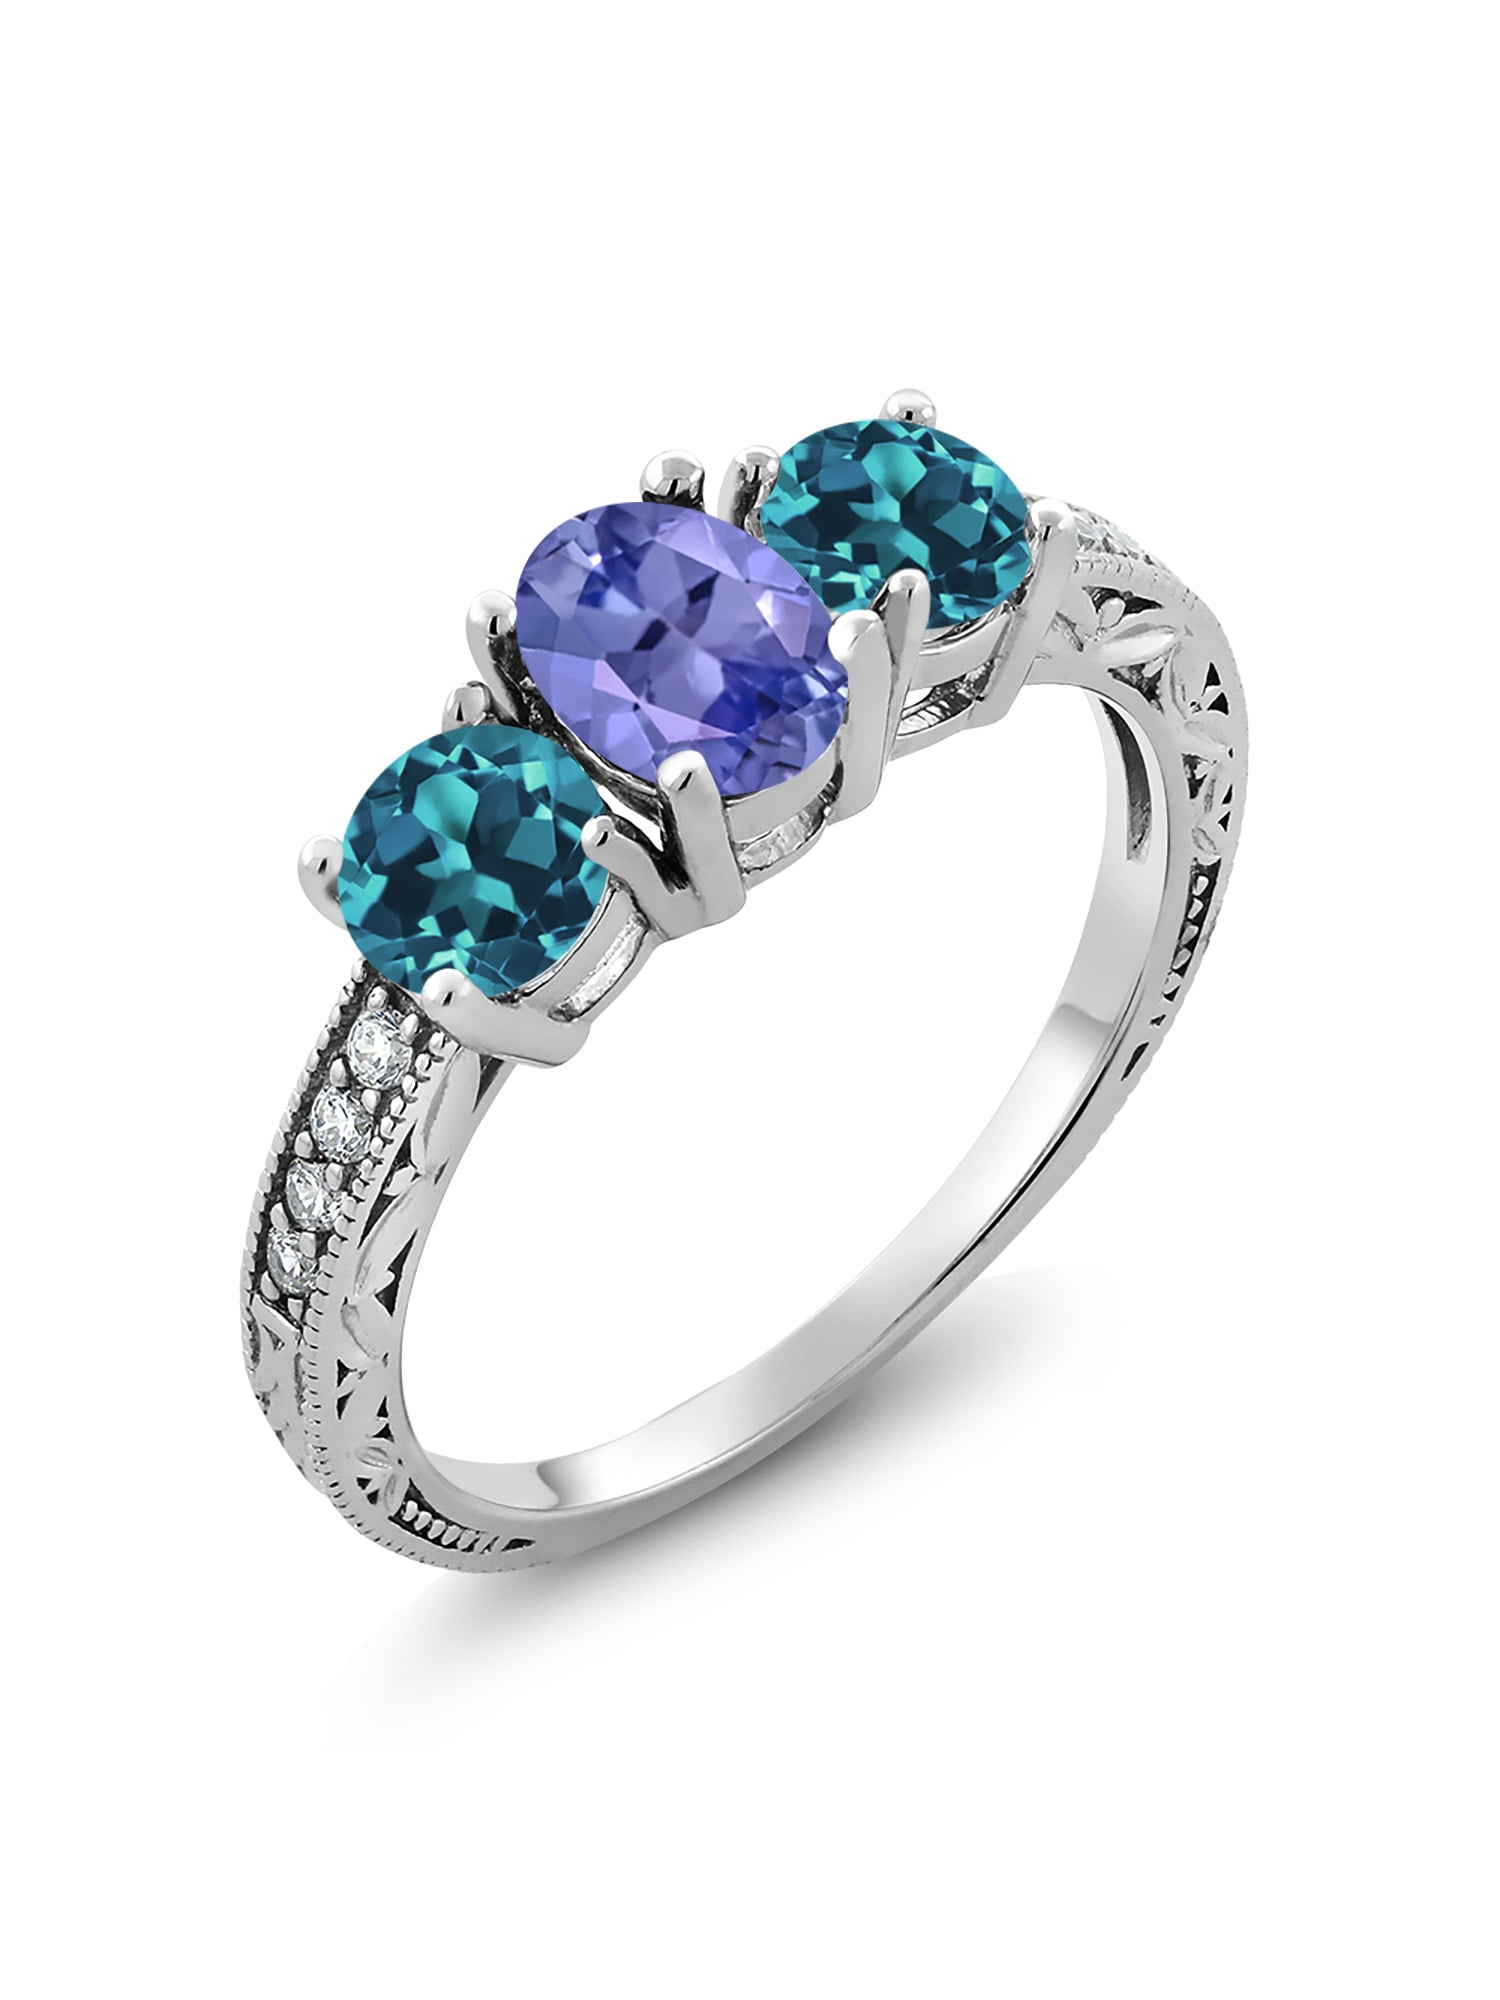 Gem Stone King 0.68 Ct Round London Blue Topaz White Diamond 925 Sterling Silver 3-Stone Ring 